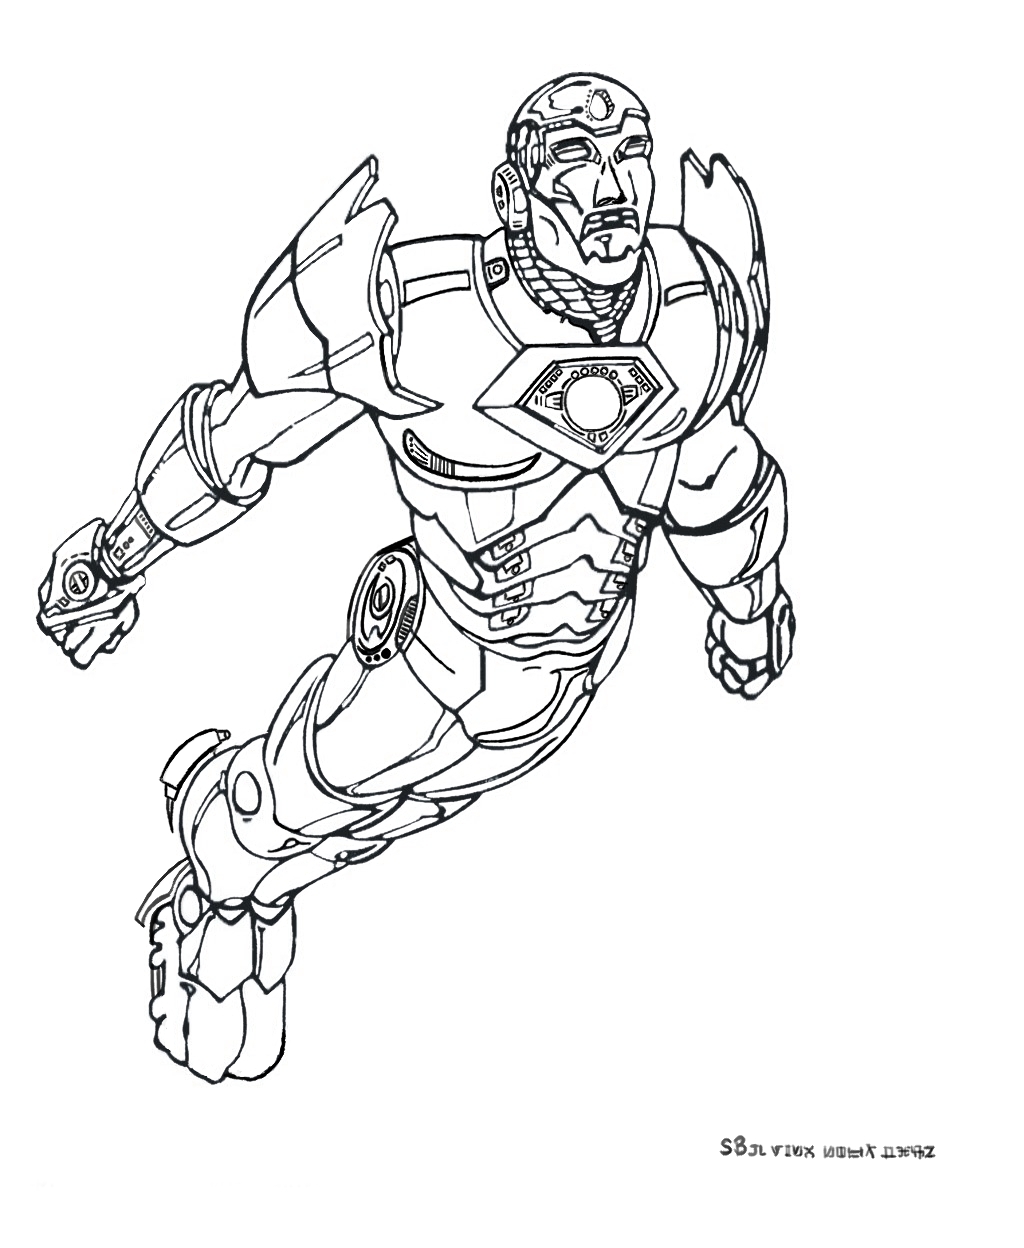 Classic Iron man Iron man Mk 46 Sketch by Dan21Almeida95 on DeviantArt